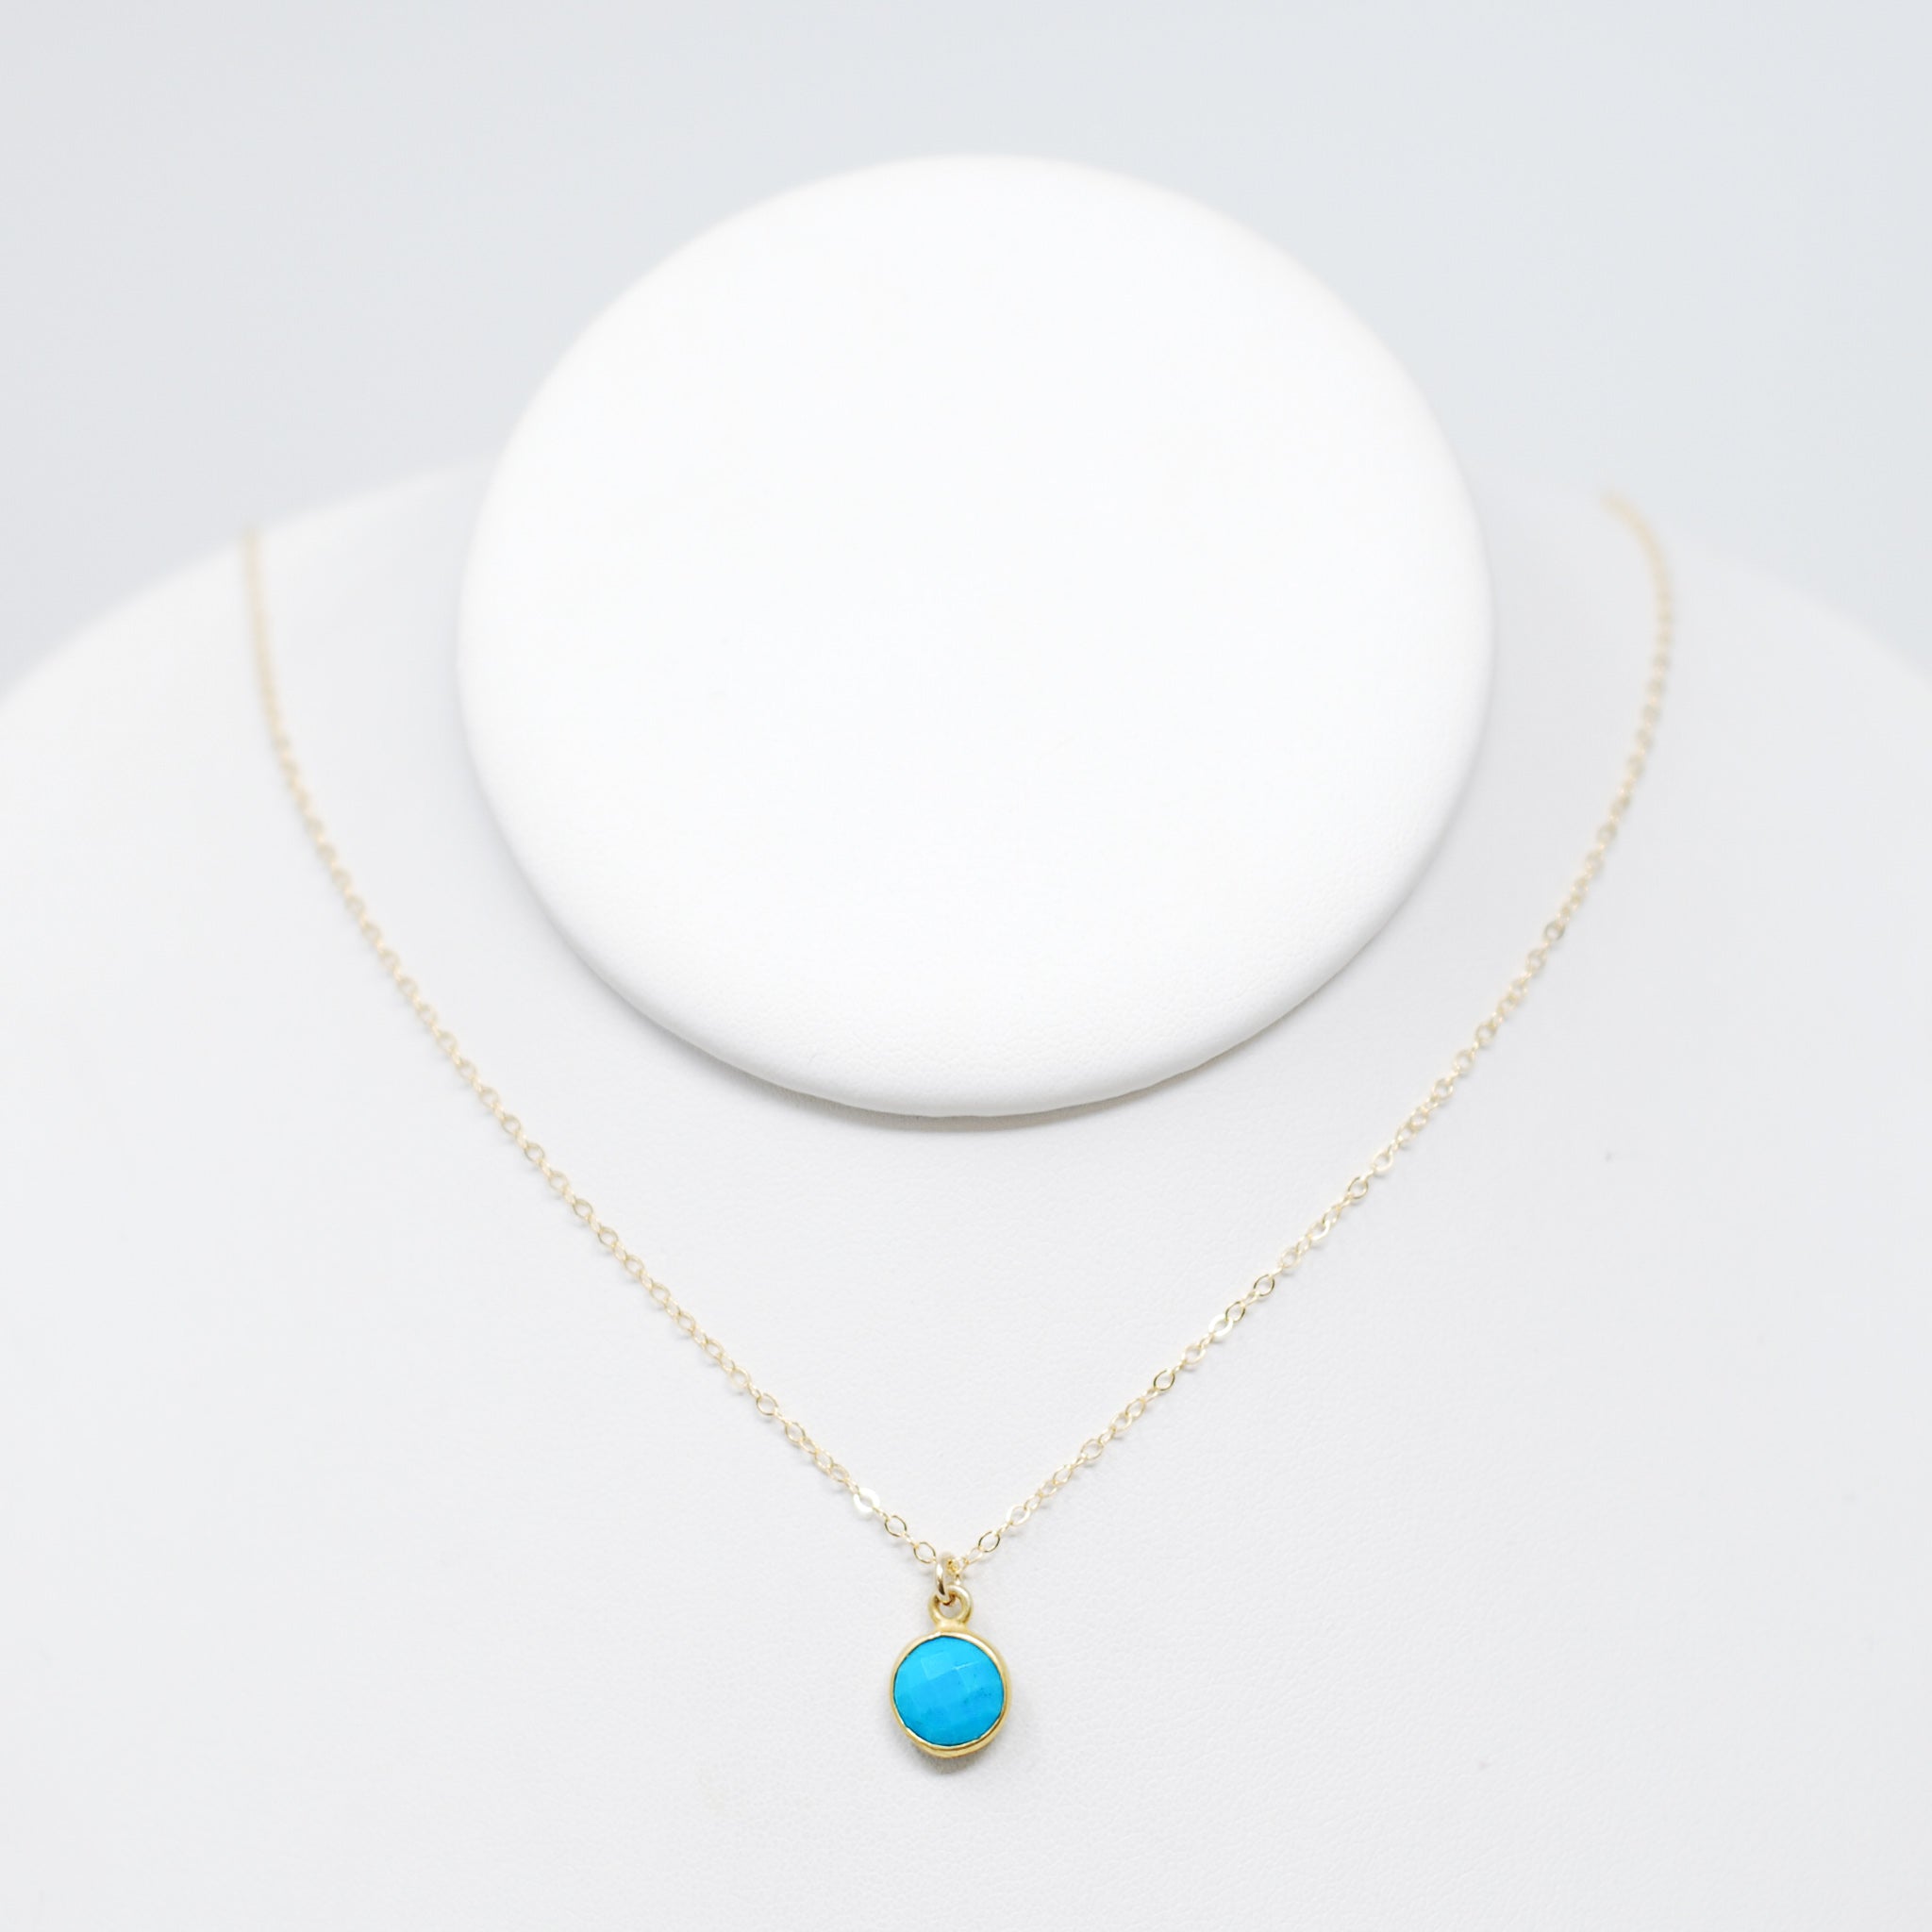 Turquoise & Goldfill Necklace - Jewel Ya